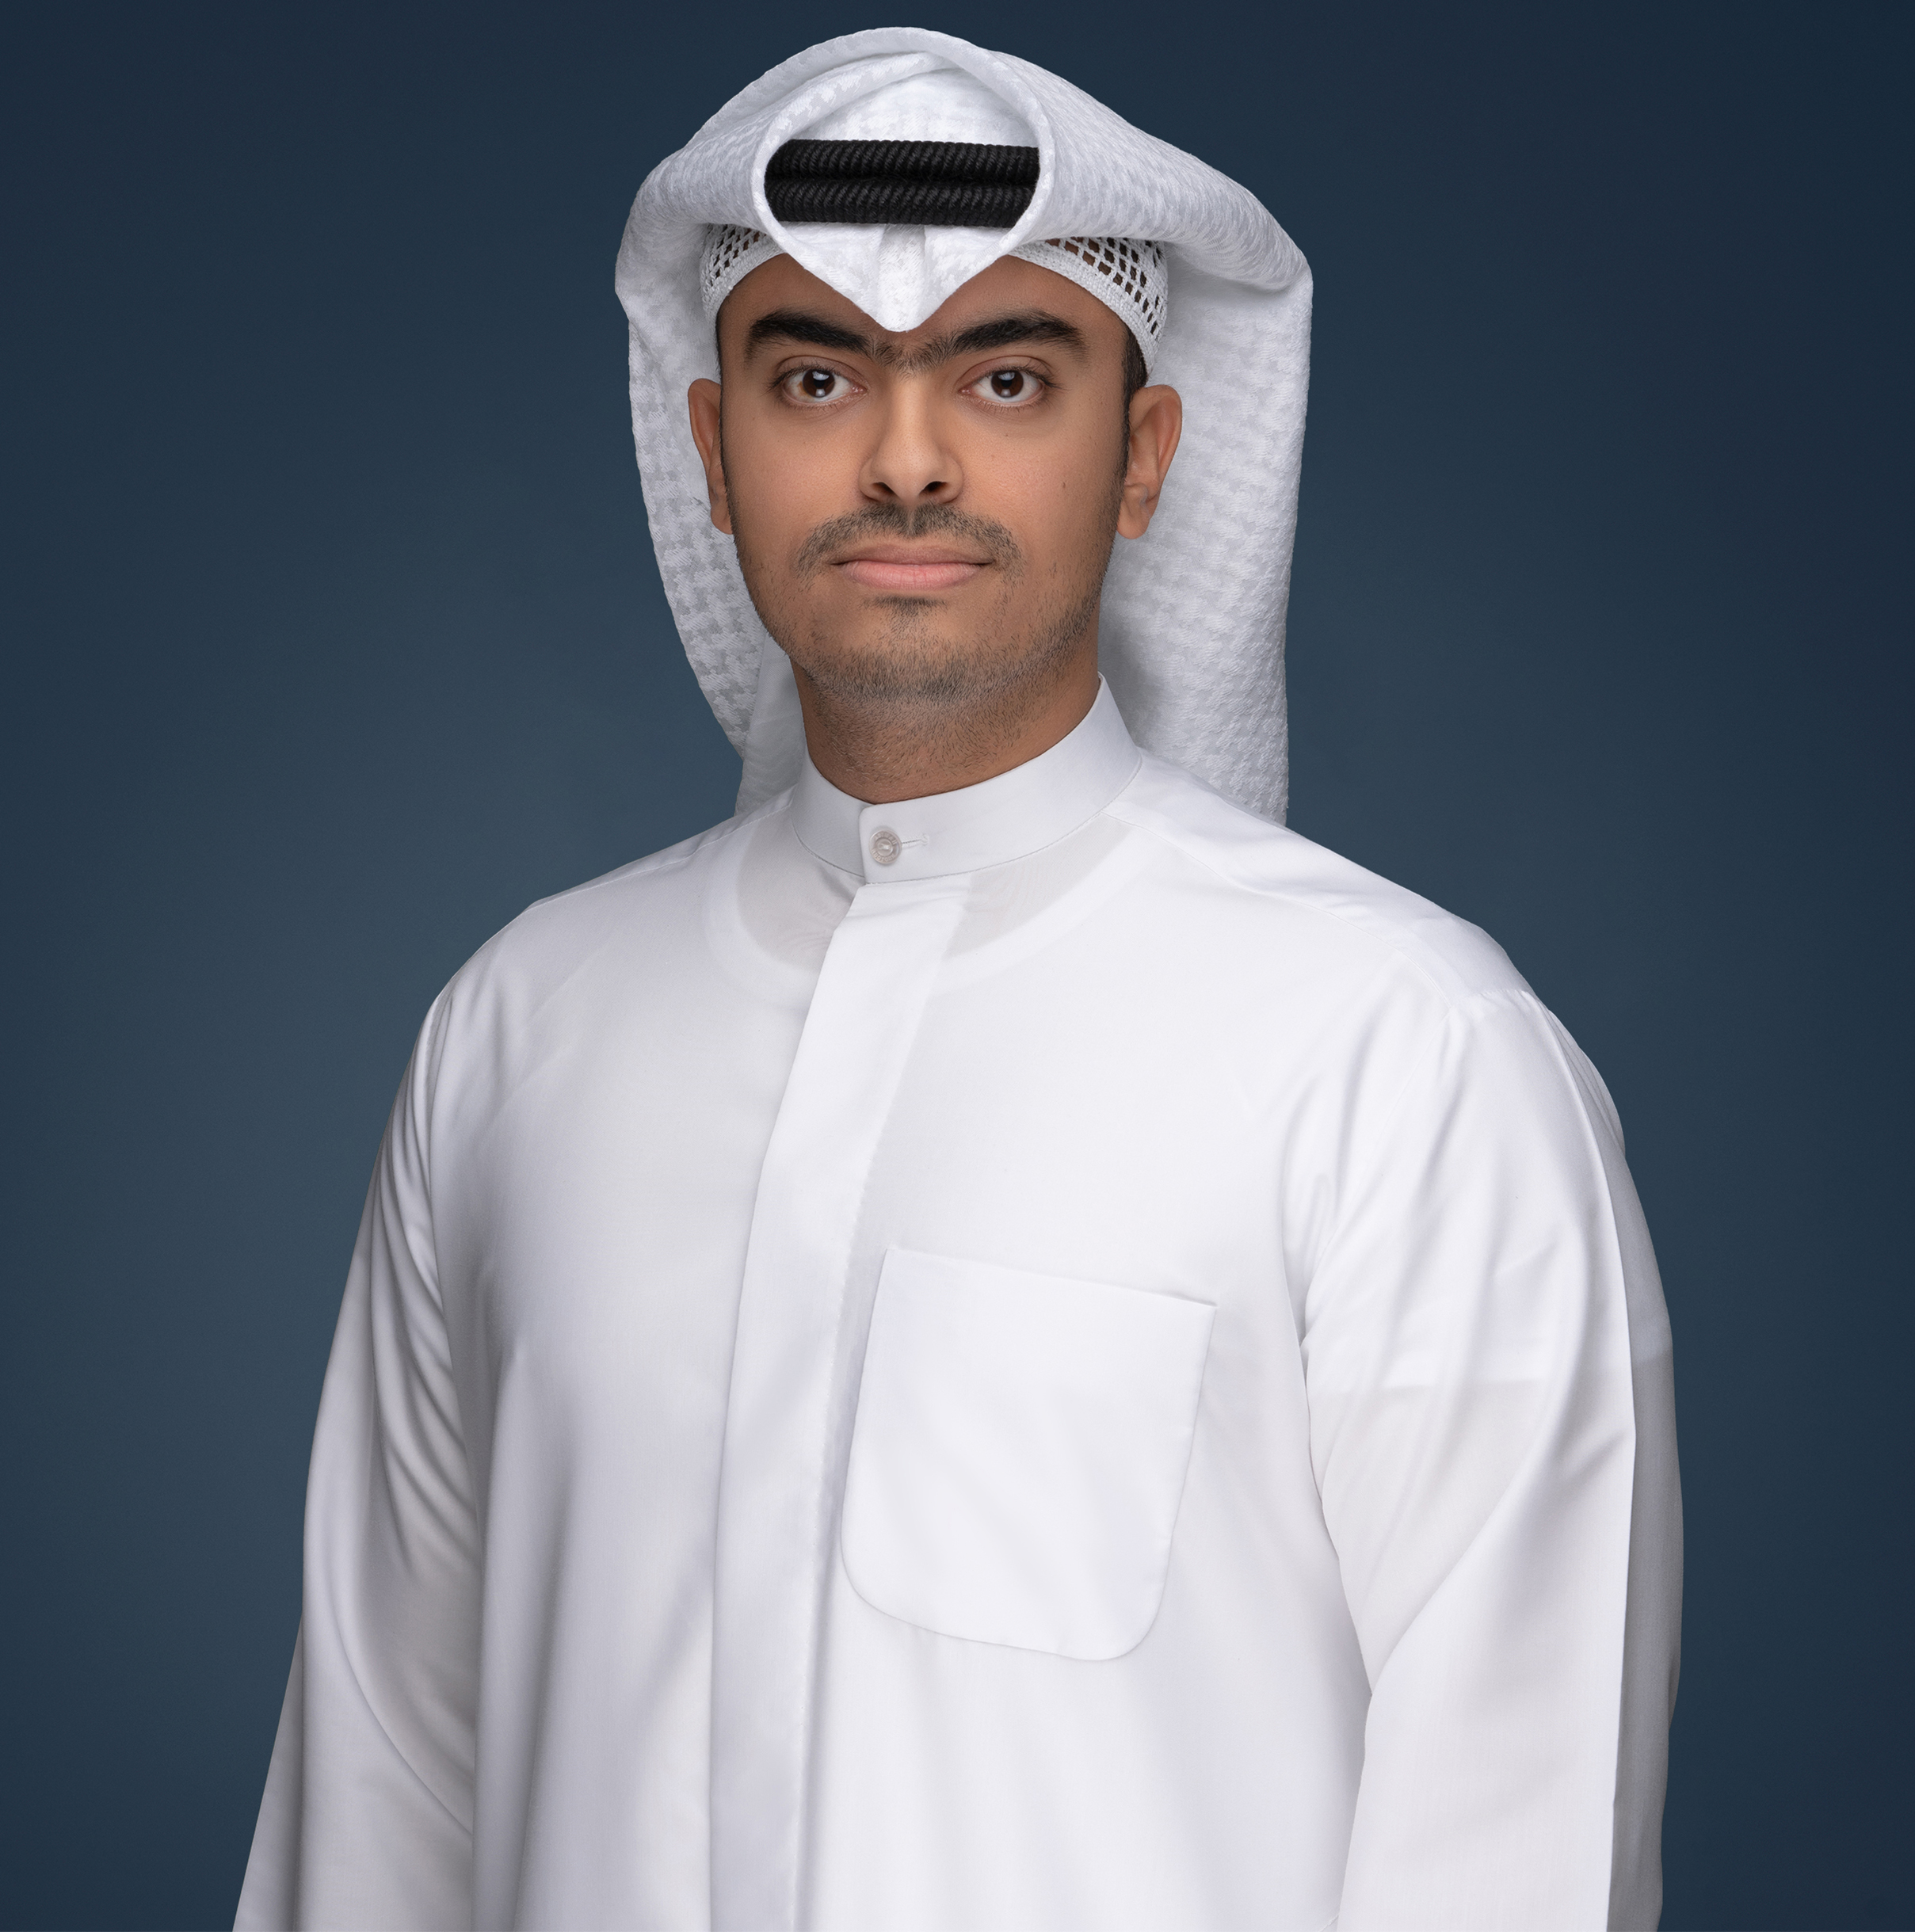 Hamad Abdulrahman Al-Sanie